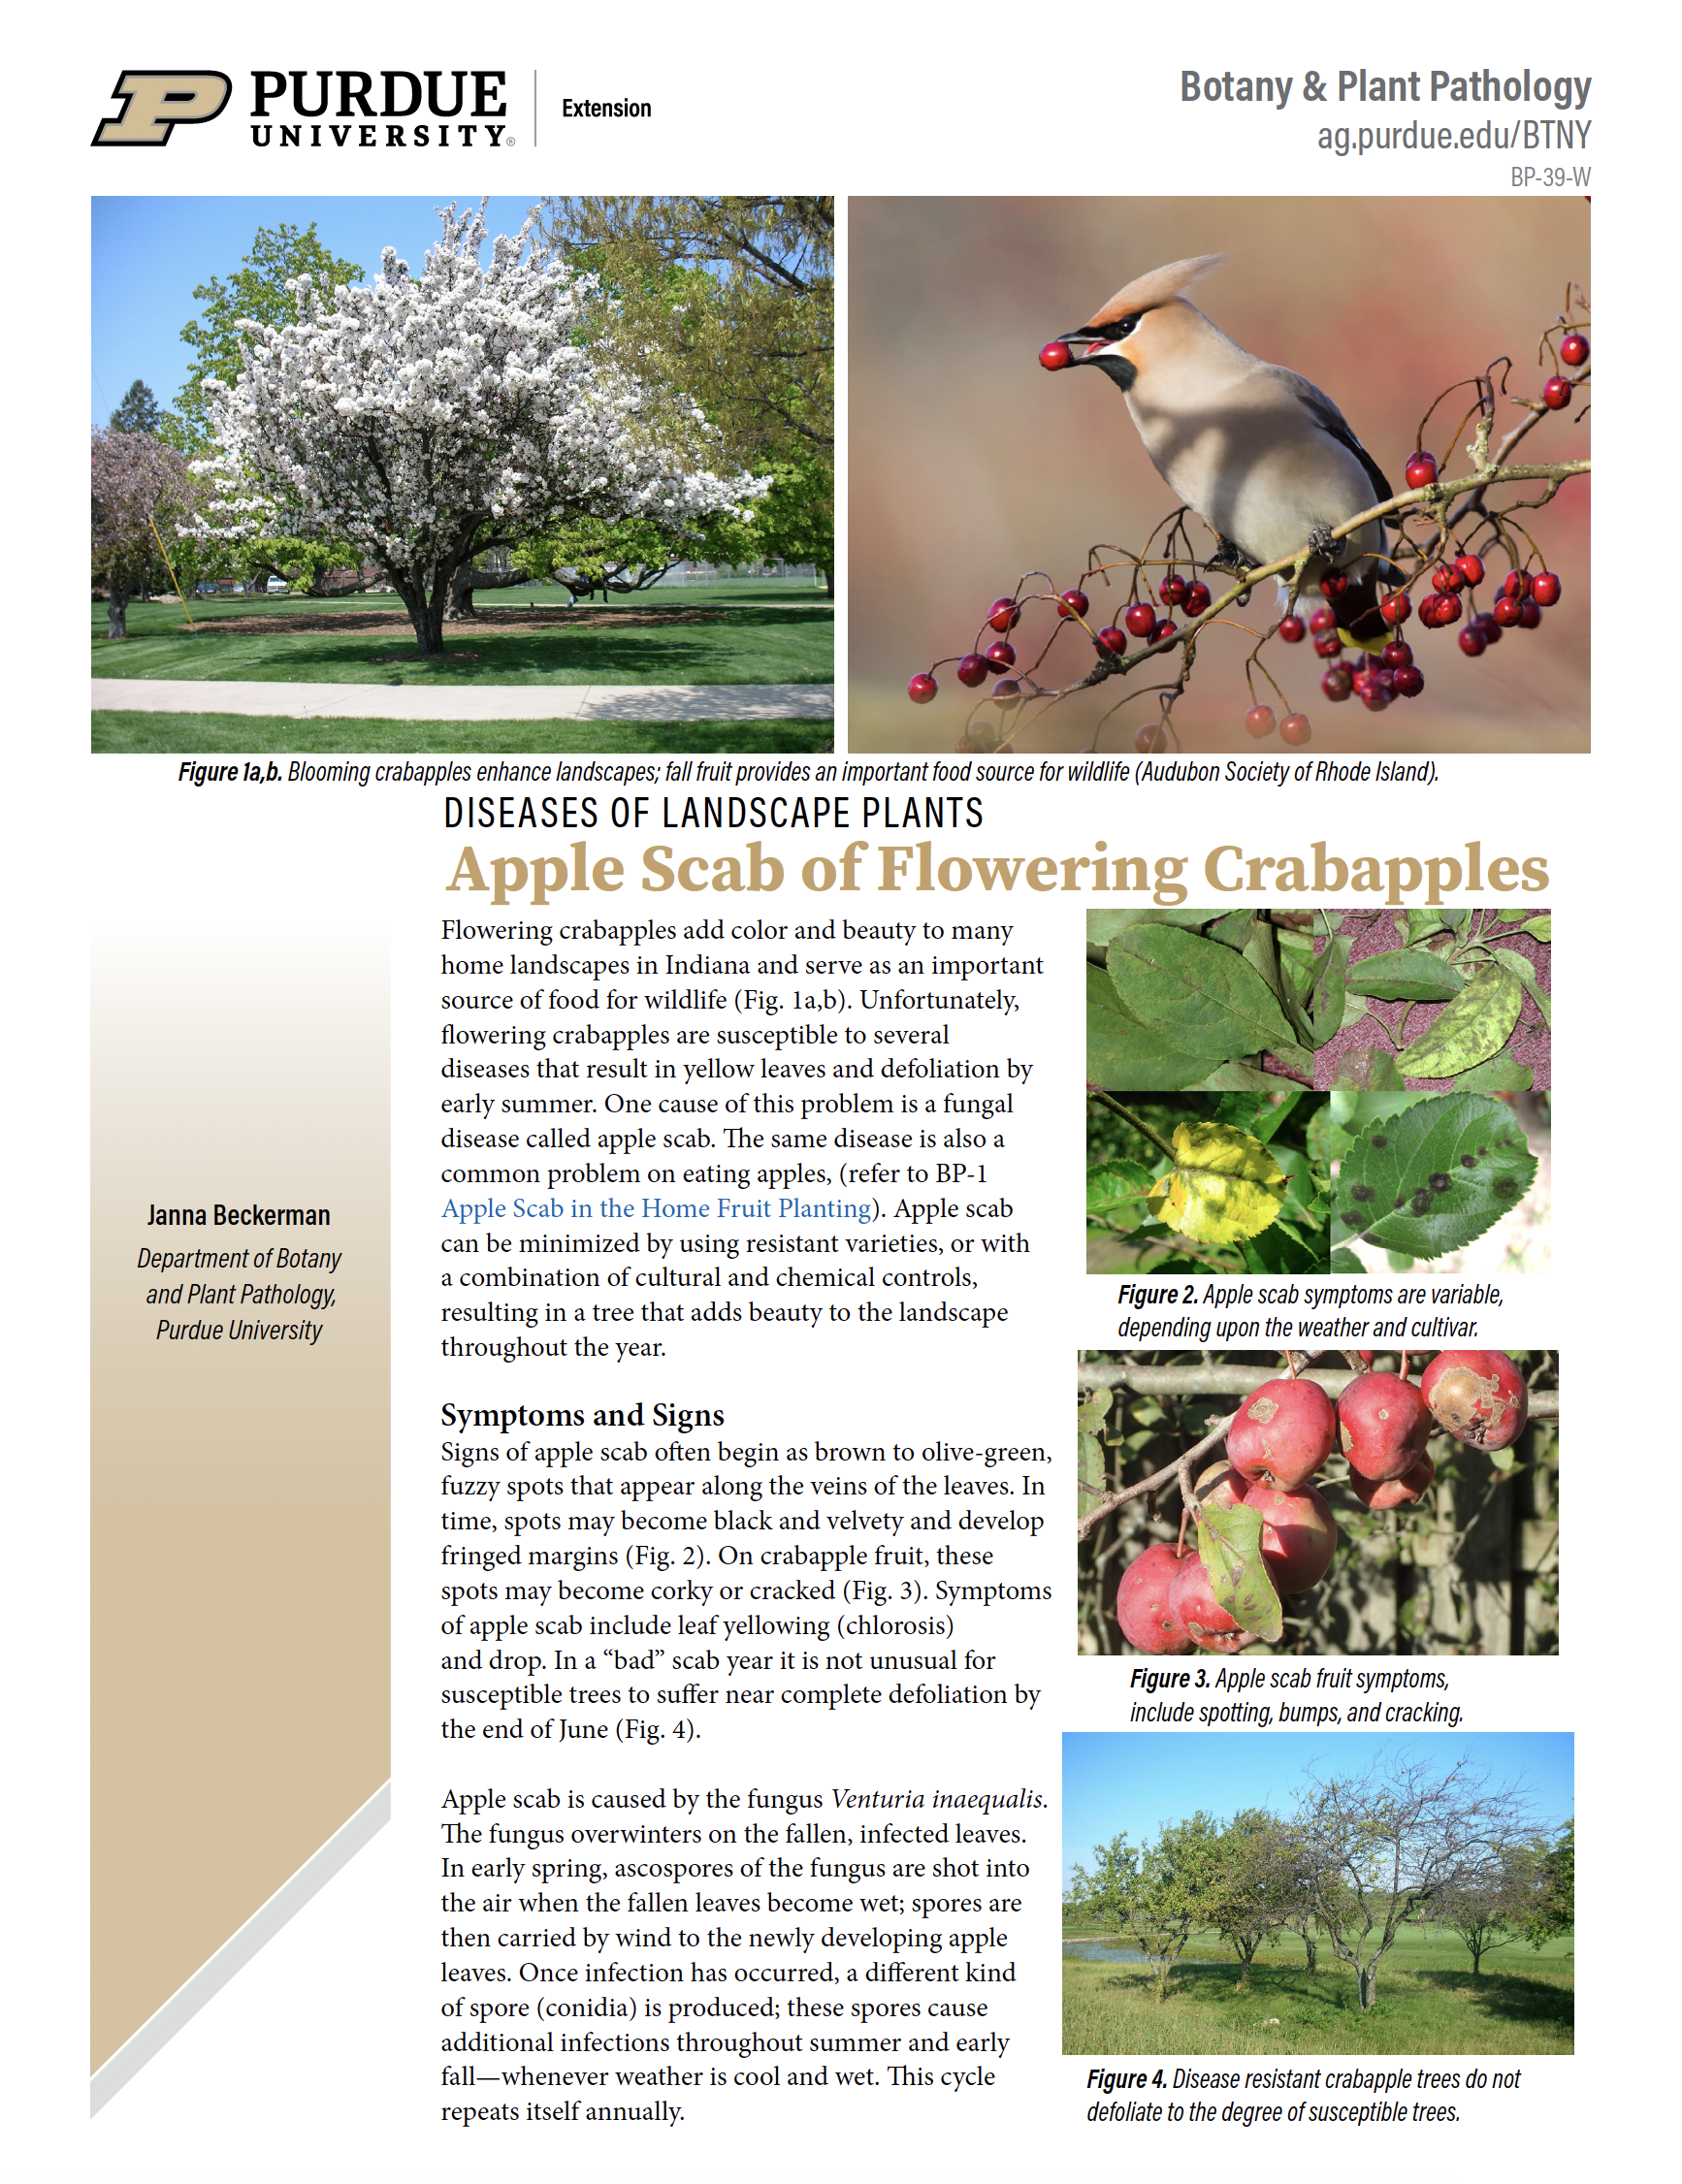 Apple Scab of Flowering Crabapples